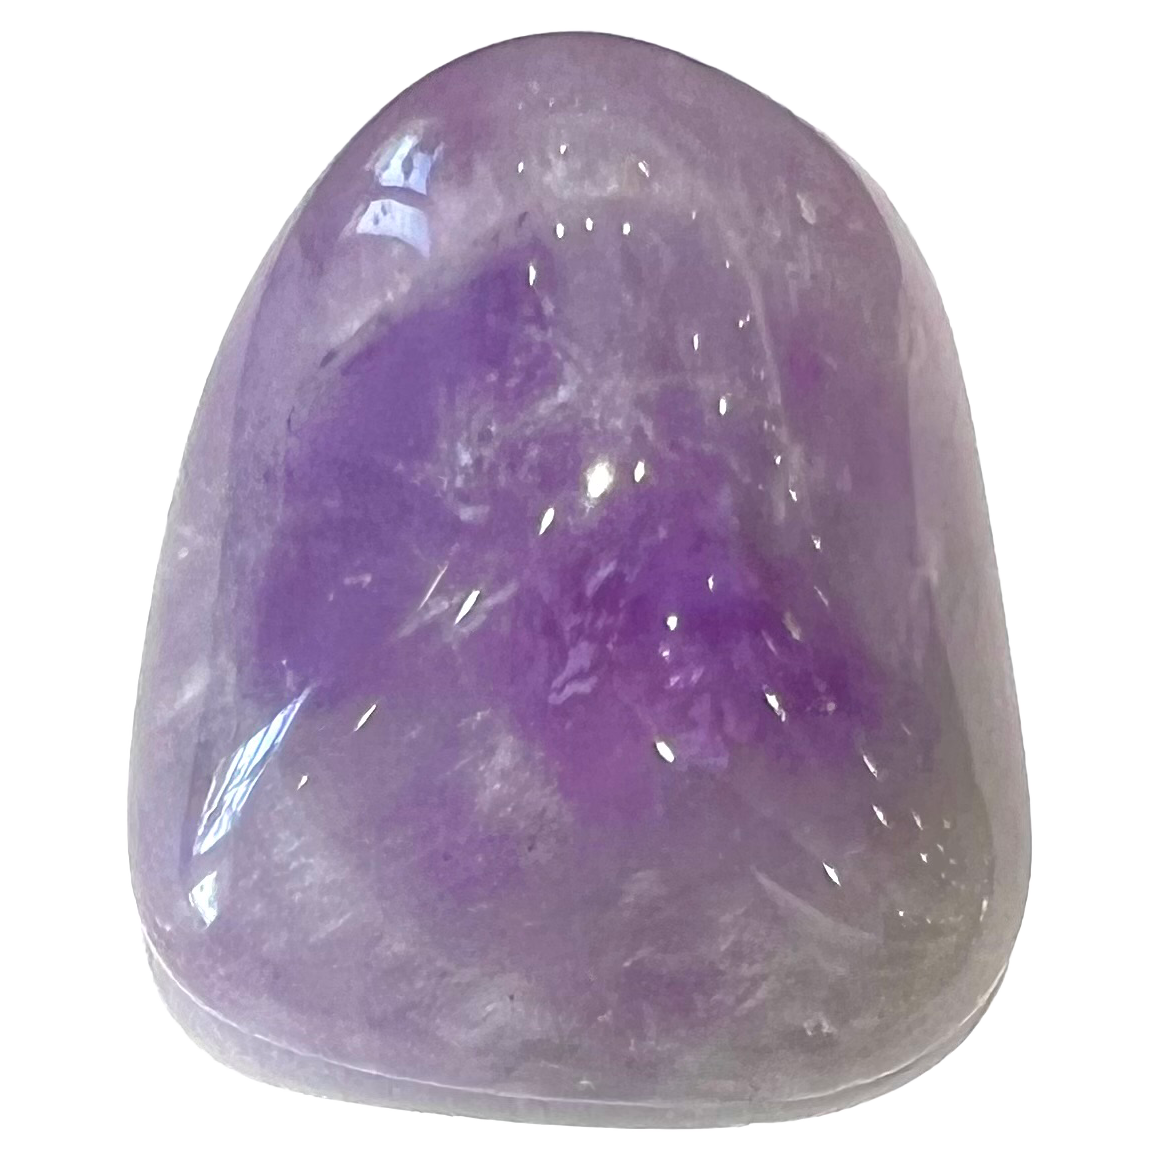 A tumble polished purple amethyst stone.